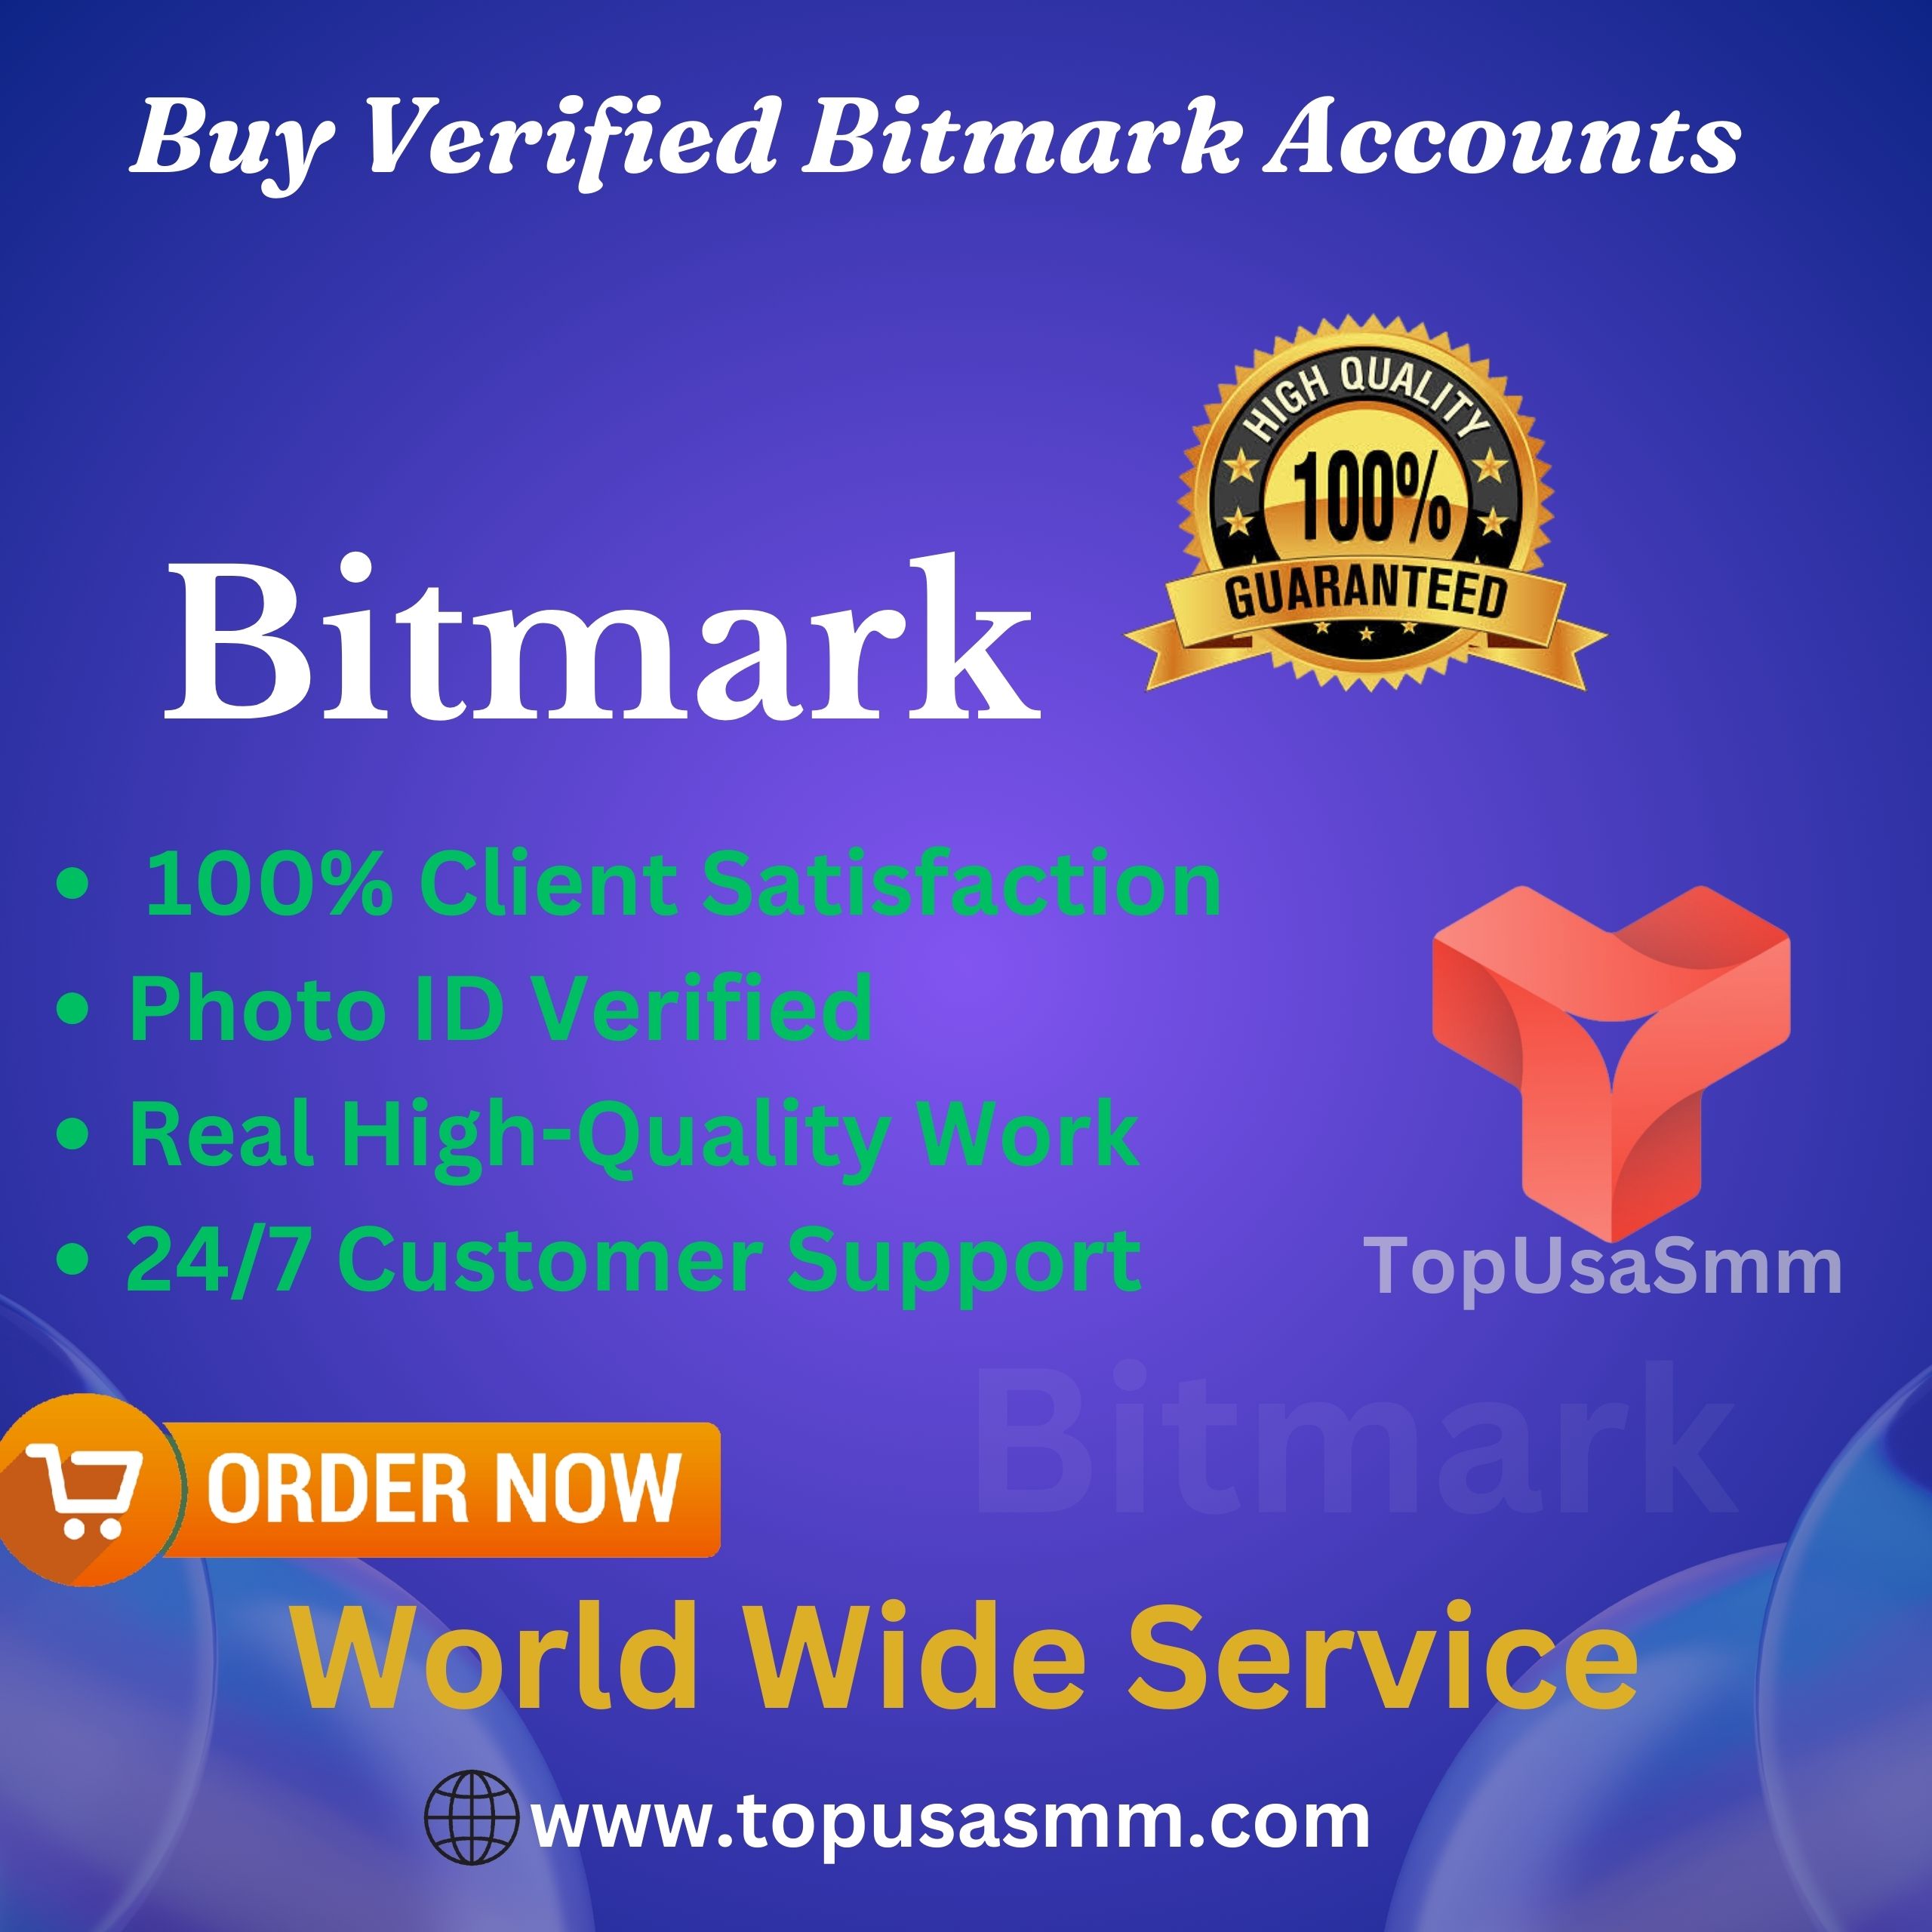 Buy Verified Bitmark Accounts - TopUsaSmm